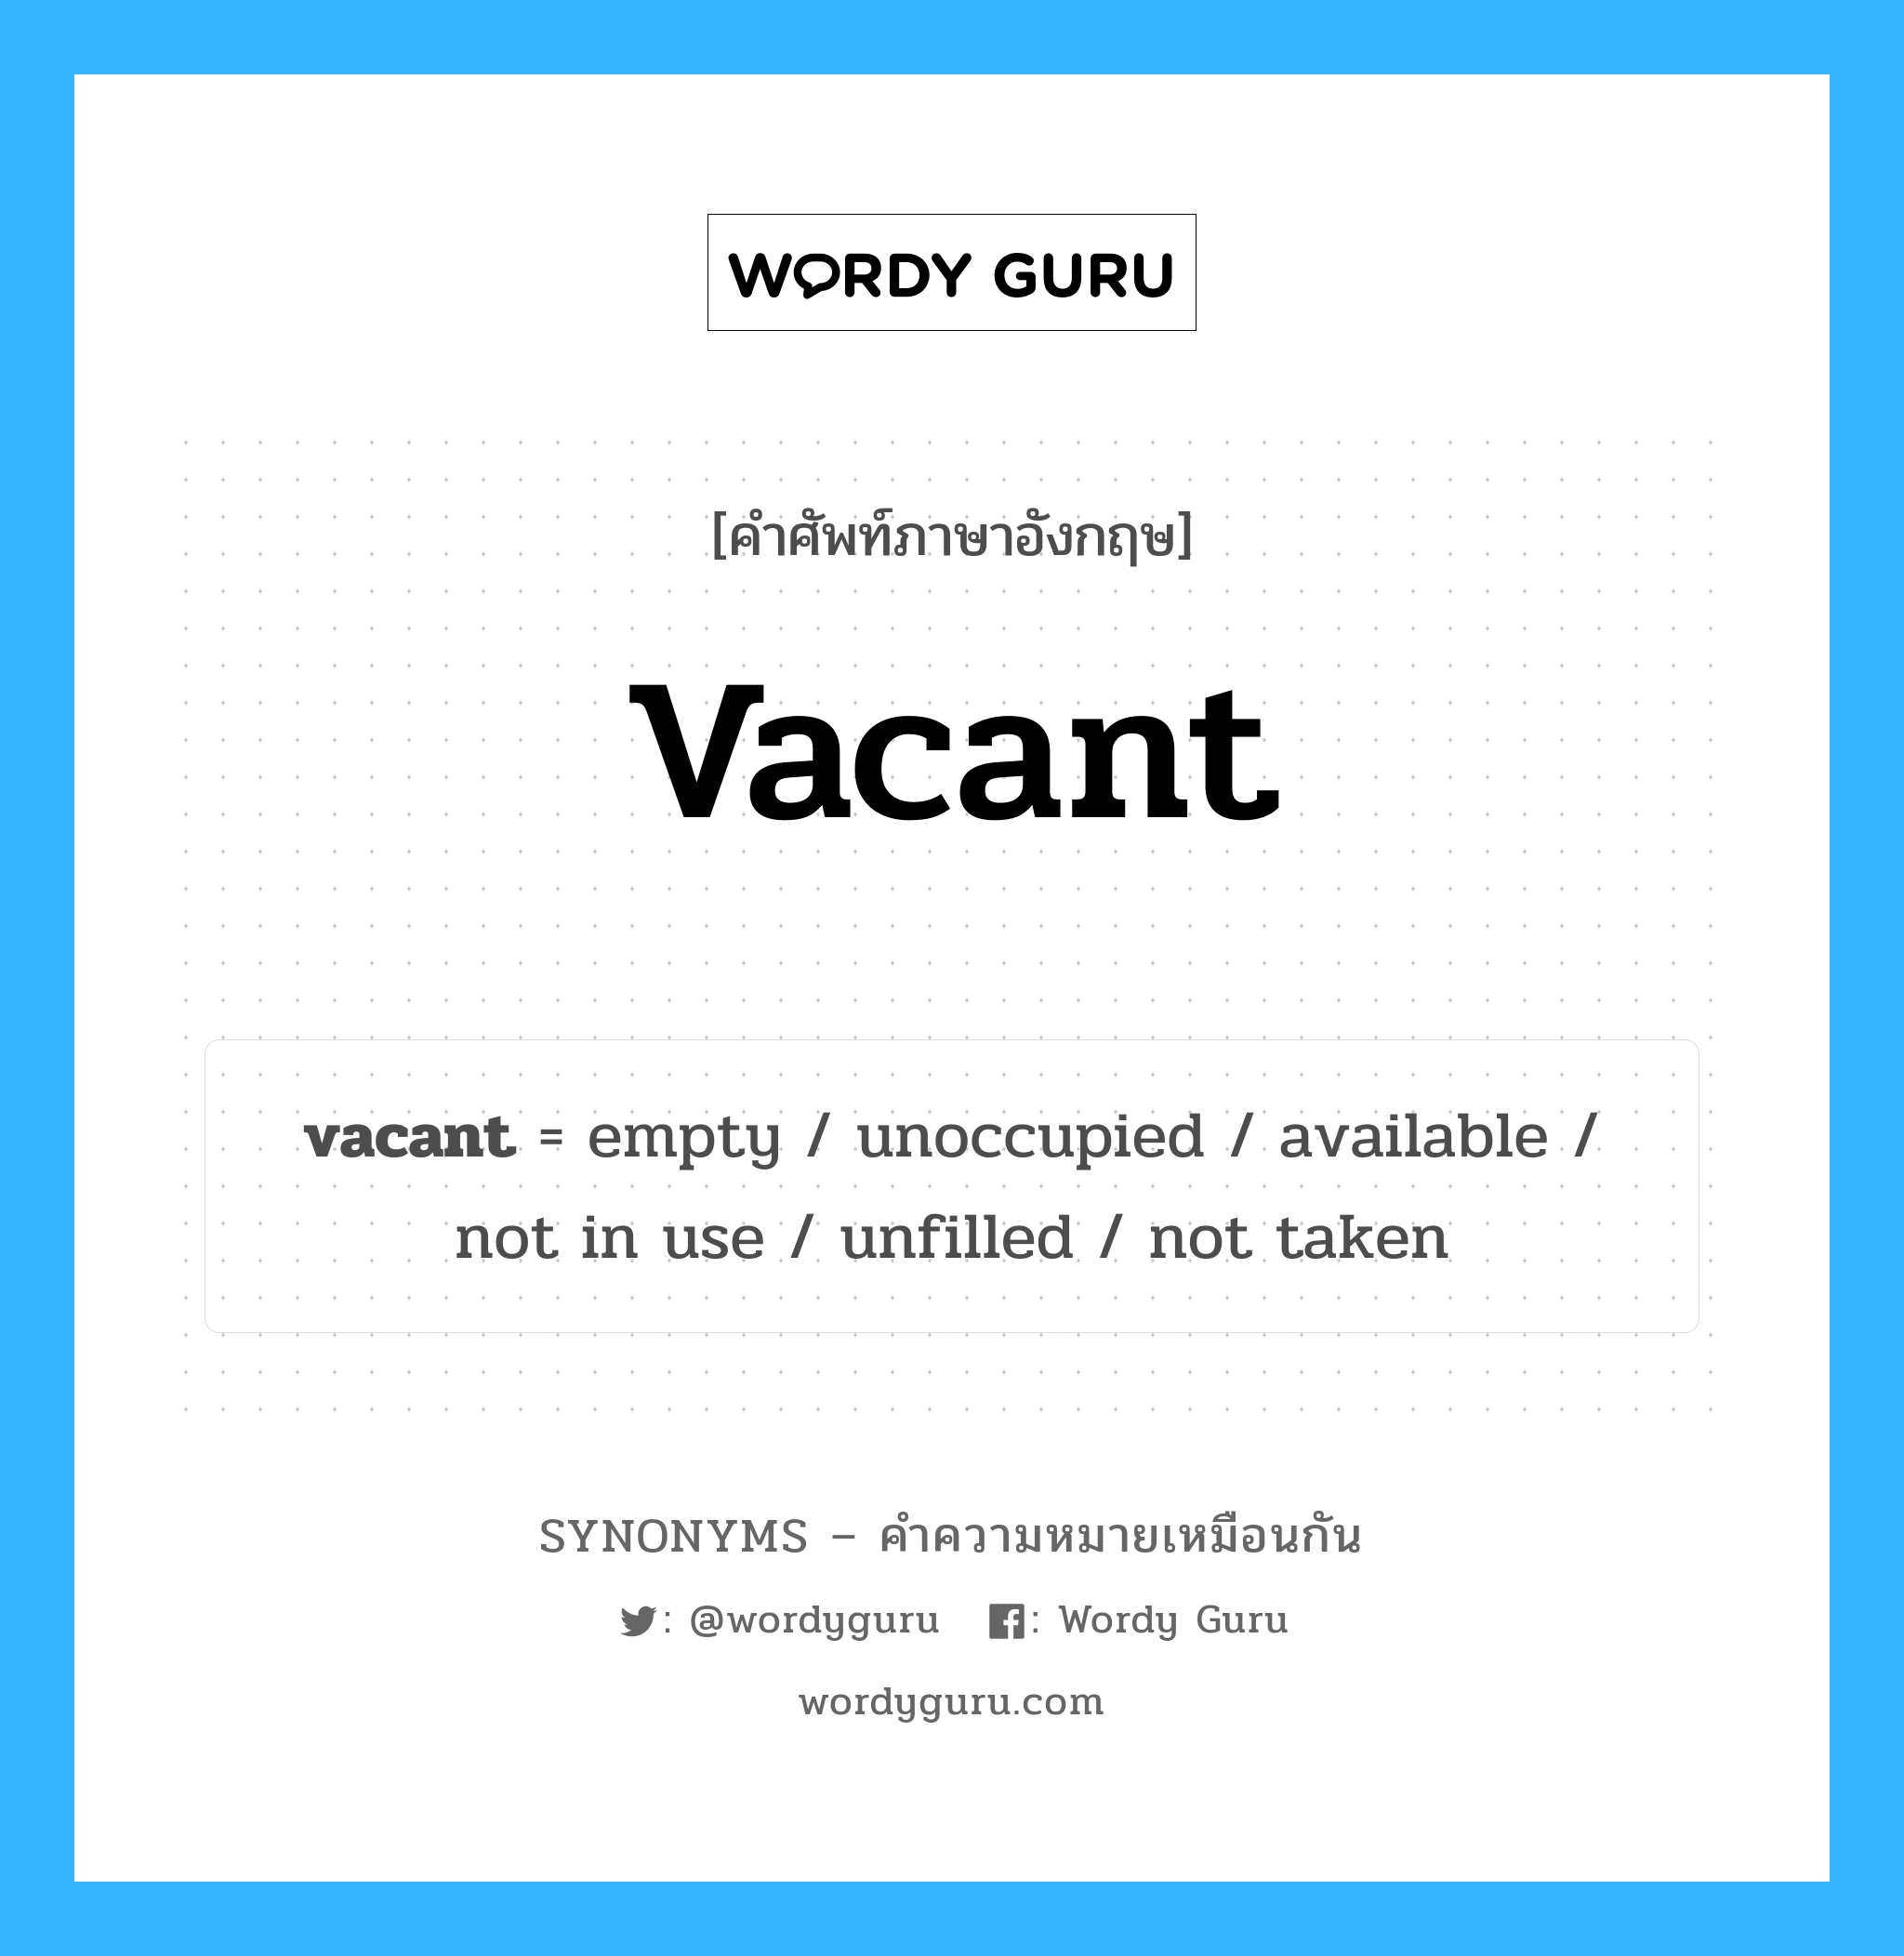 unfilled เป็นหนึ่งใน vacant และมีคำอื่น ๆ อีกดังนี้, คำศัพท์ภาษาอังกฤษ unfilled ความหมายคล้ายกันกับ vacant แปลว่า ไม่สำเร็จ หมวด vacant